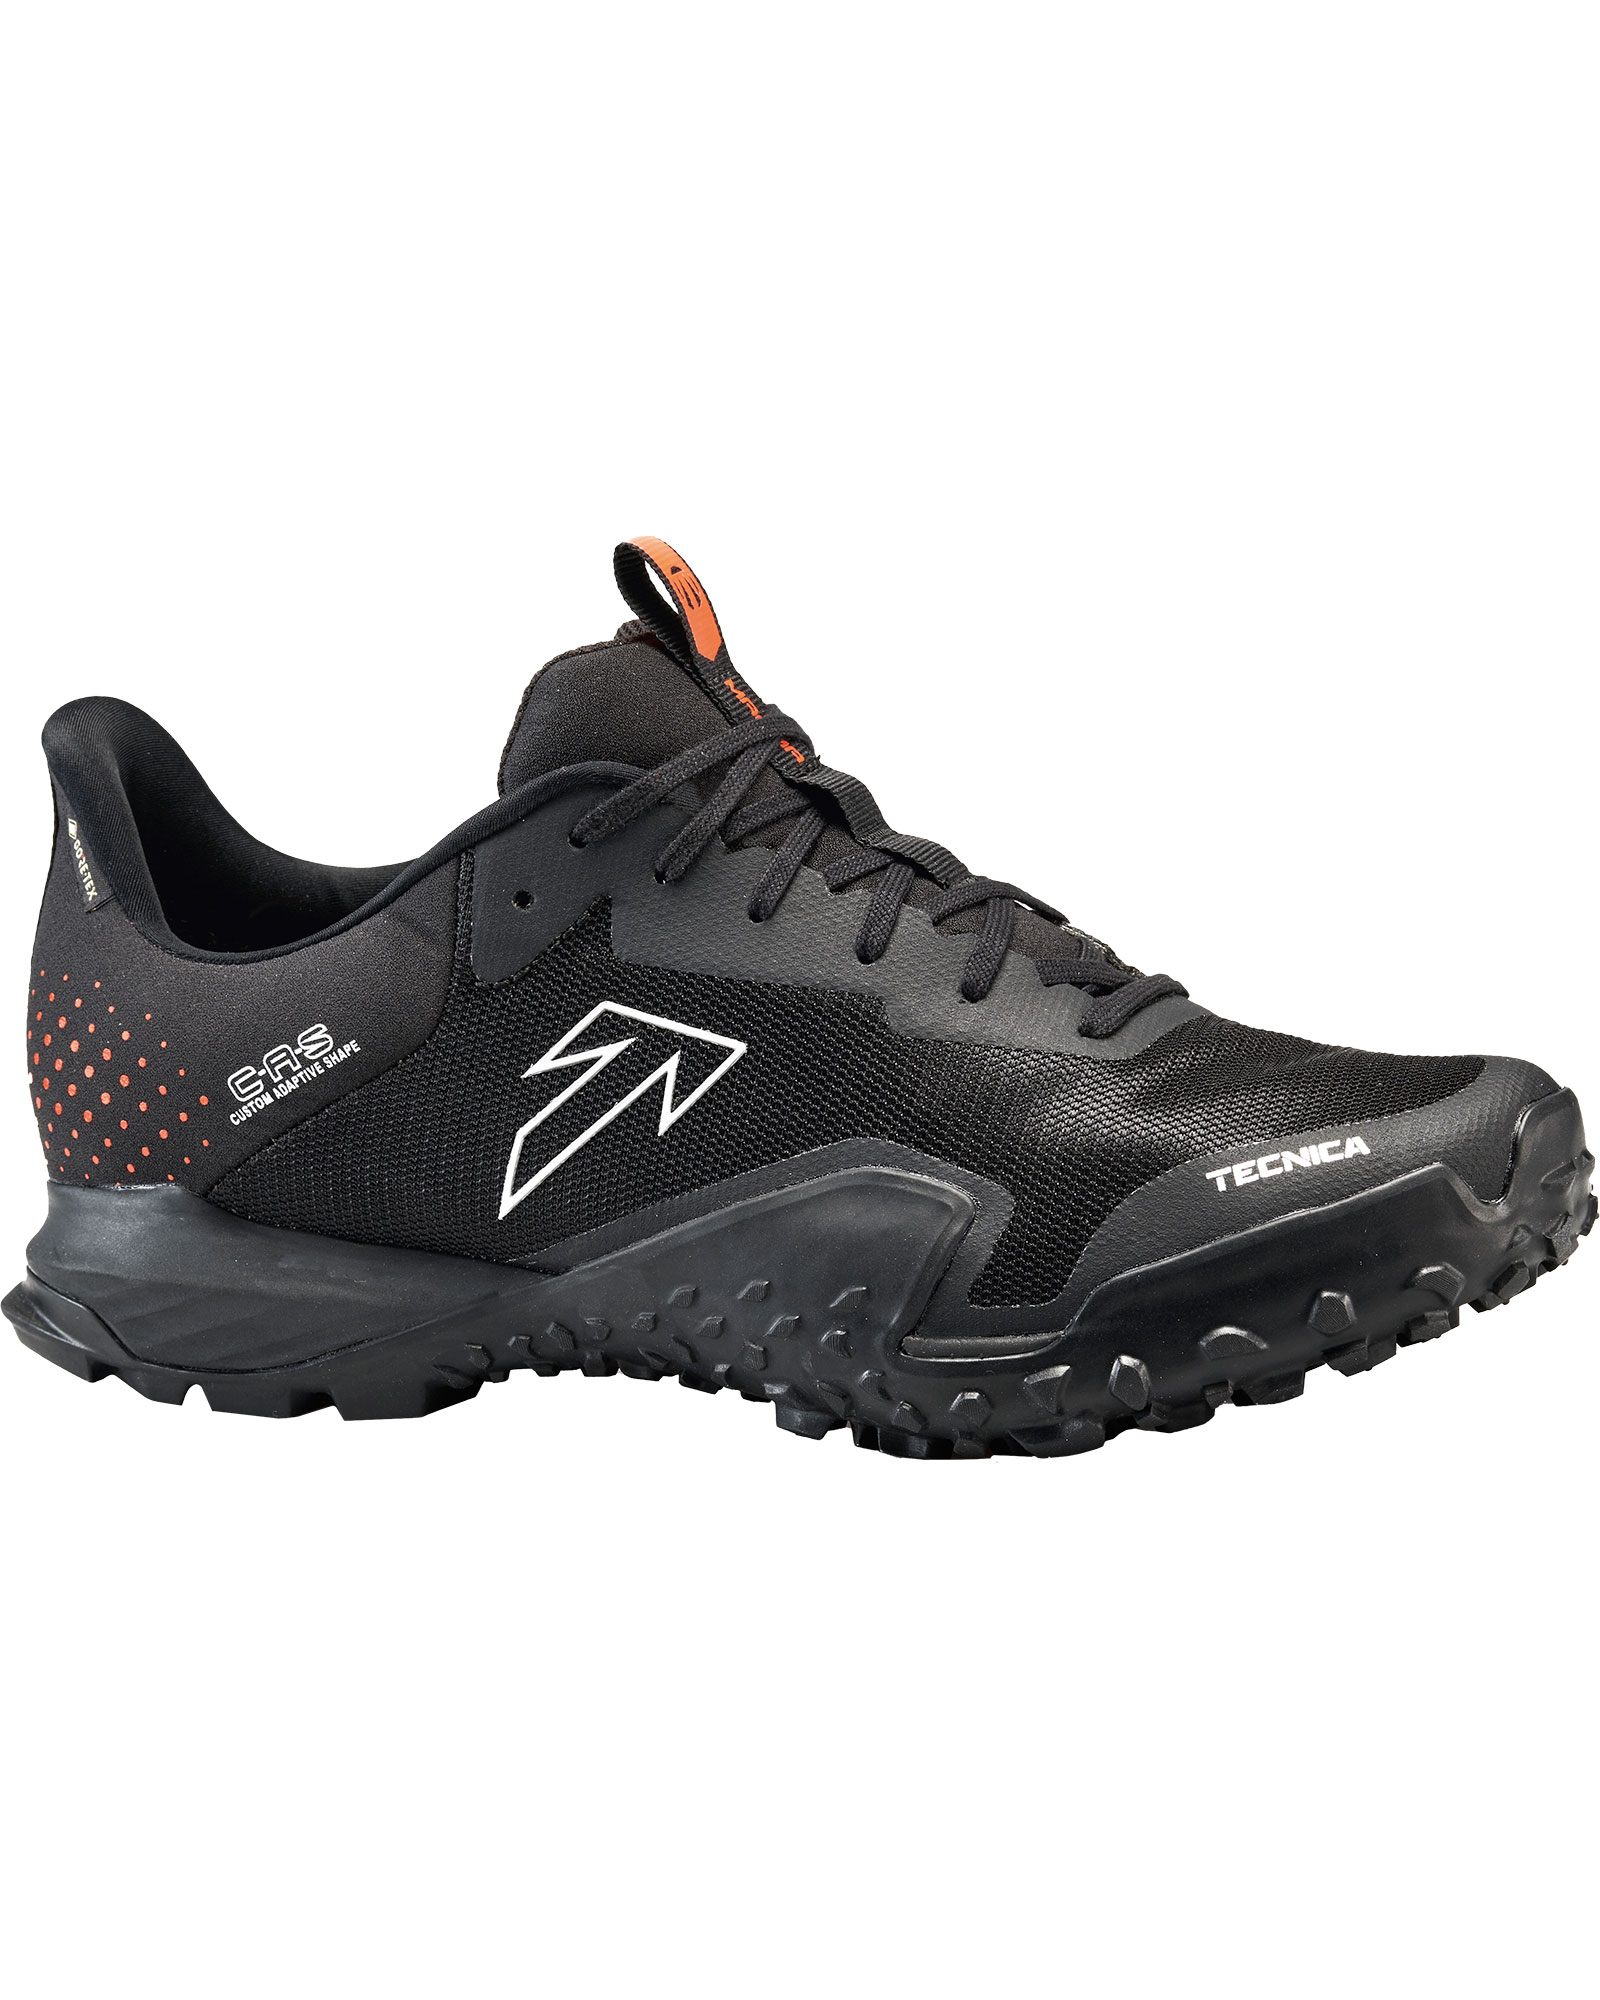 Tecnica Magma GORE TEX Men’s Shoes - Black/Dusty Lava UK 9.5